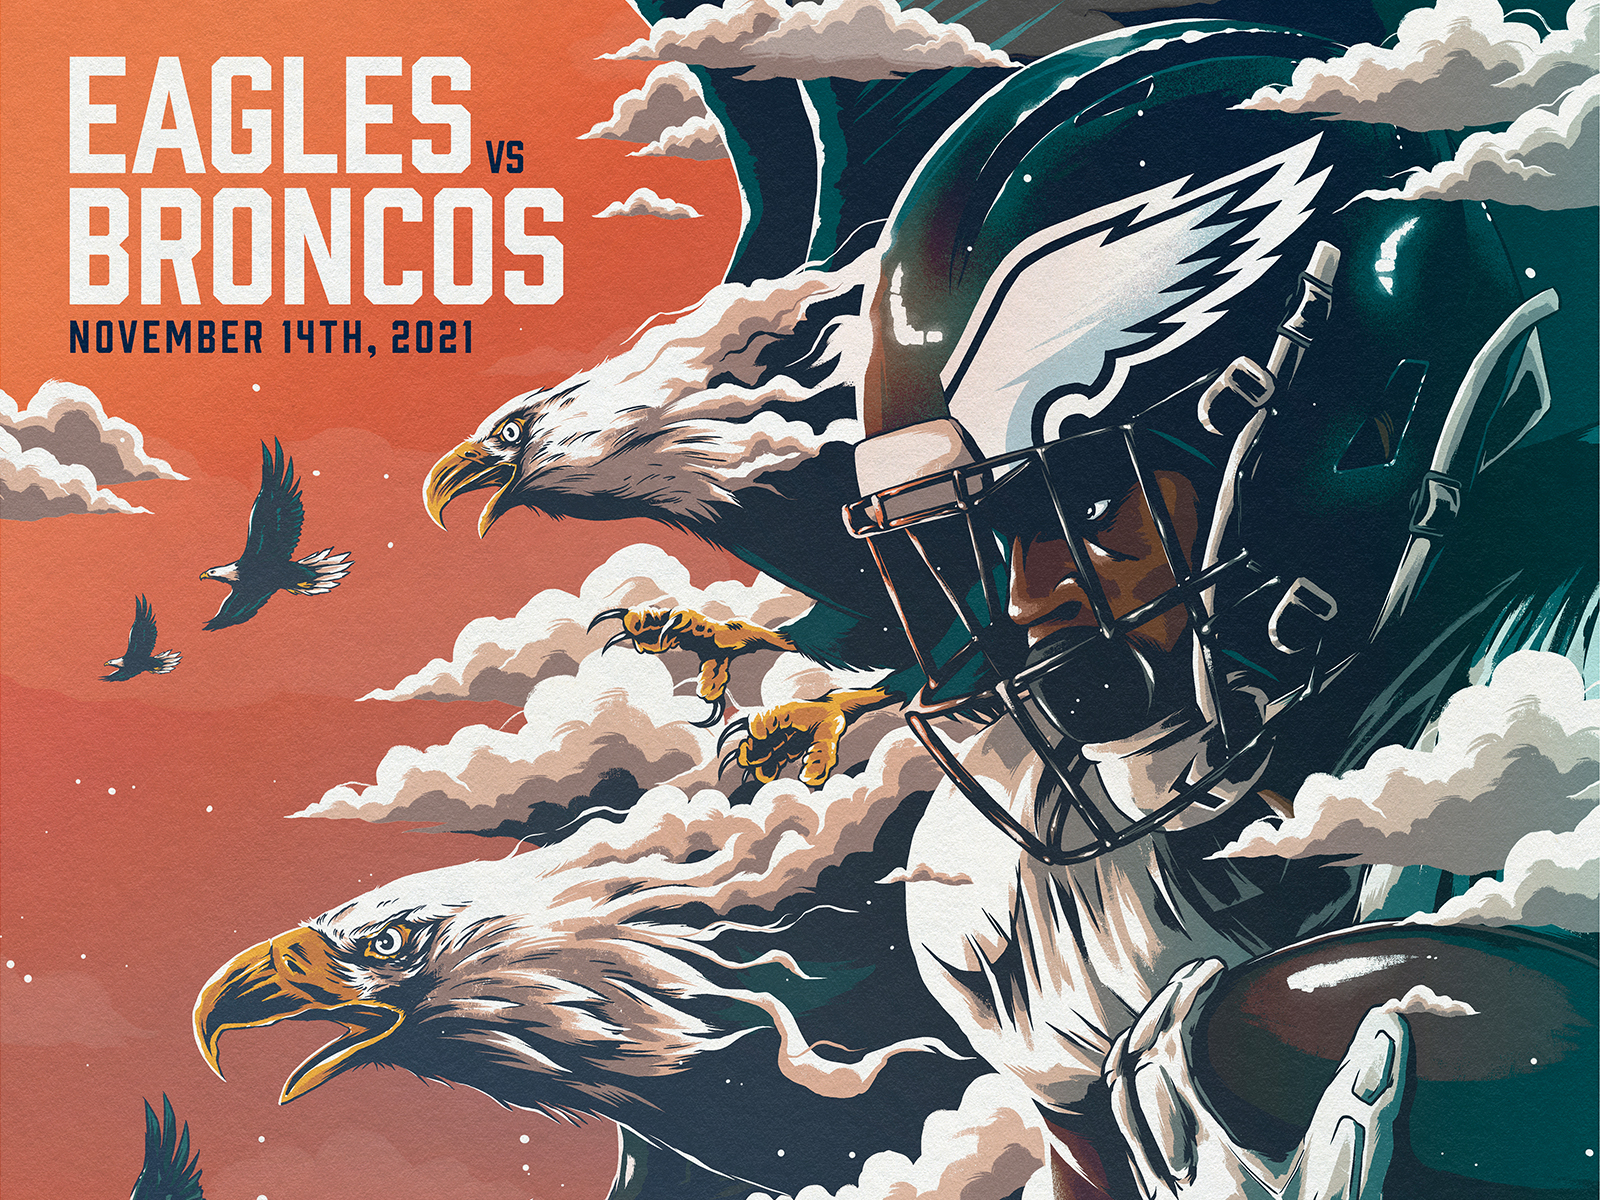 Eagles vs. Broncos by Ryan Lynn on Dribbble